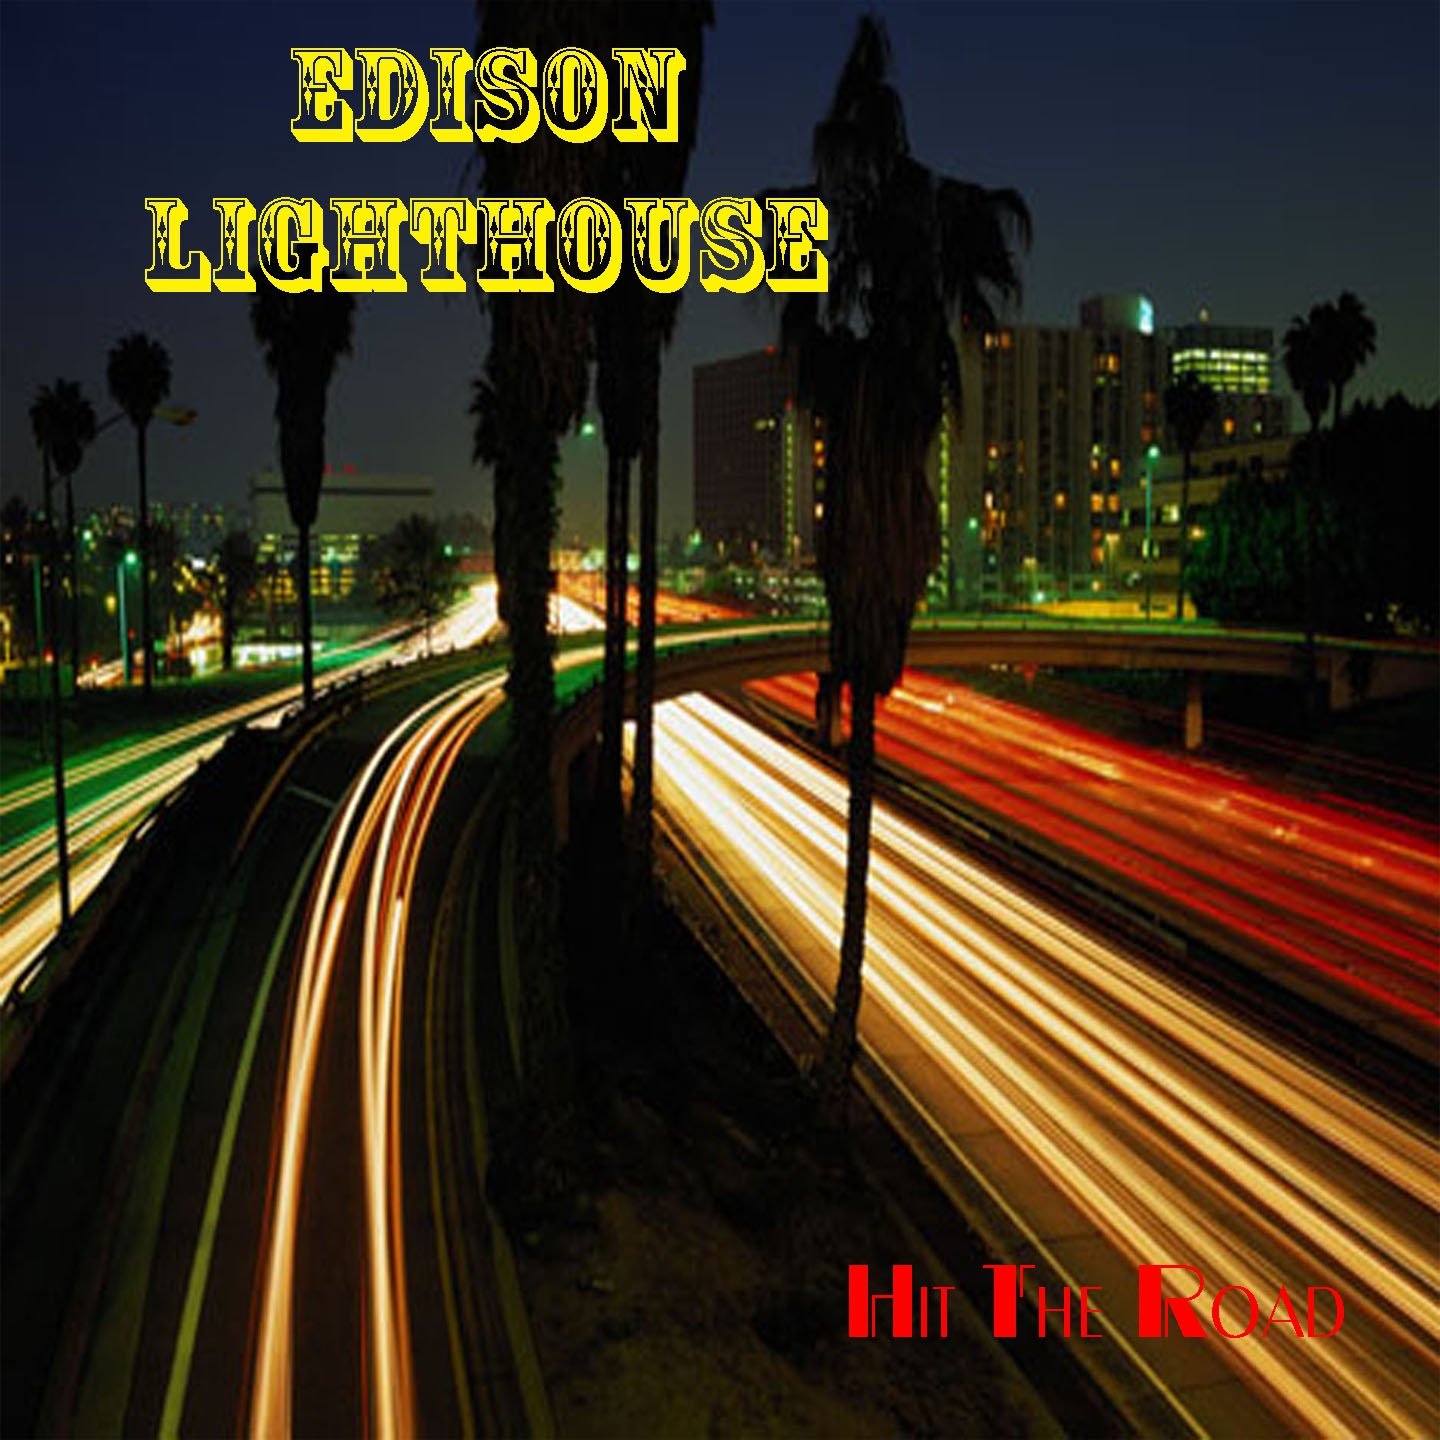 Сан франциско песня. Love grows Edison Lighthouse. Edison Lighthouse Band. Hit the Road.